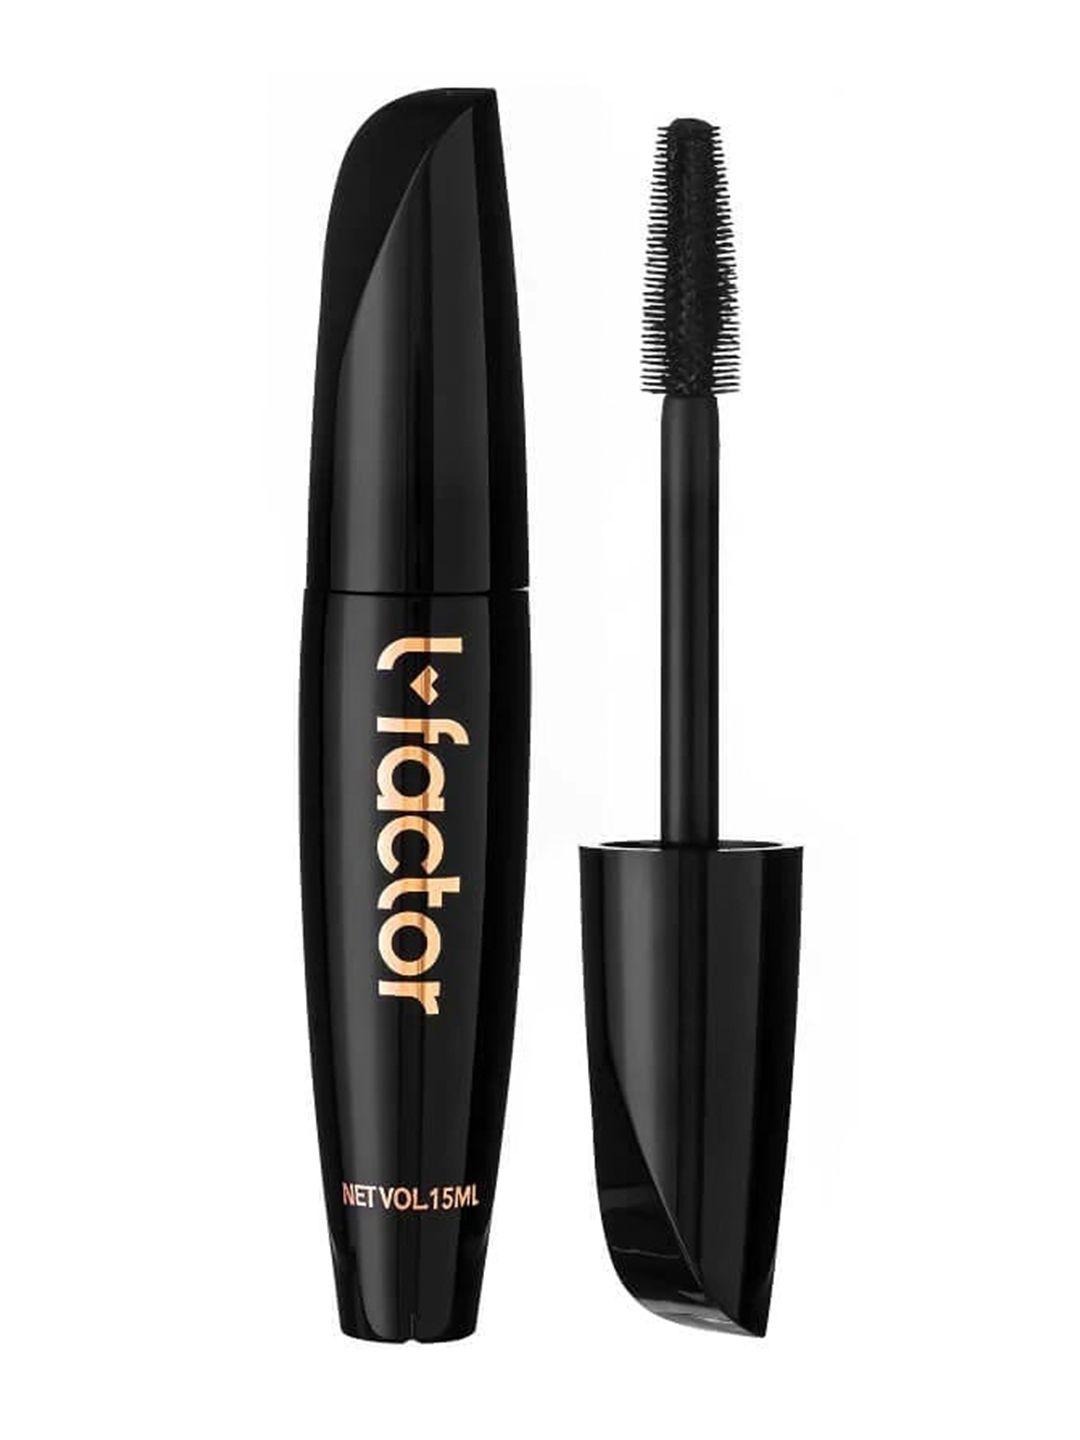 l factor cosmetics volume eyes waterproof mascara with keratin & castor oil 15ml - black